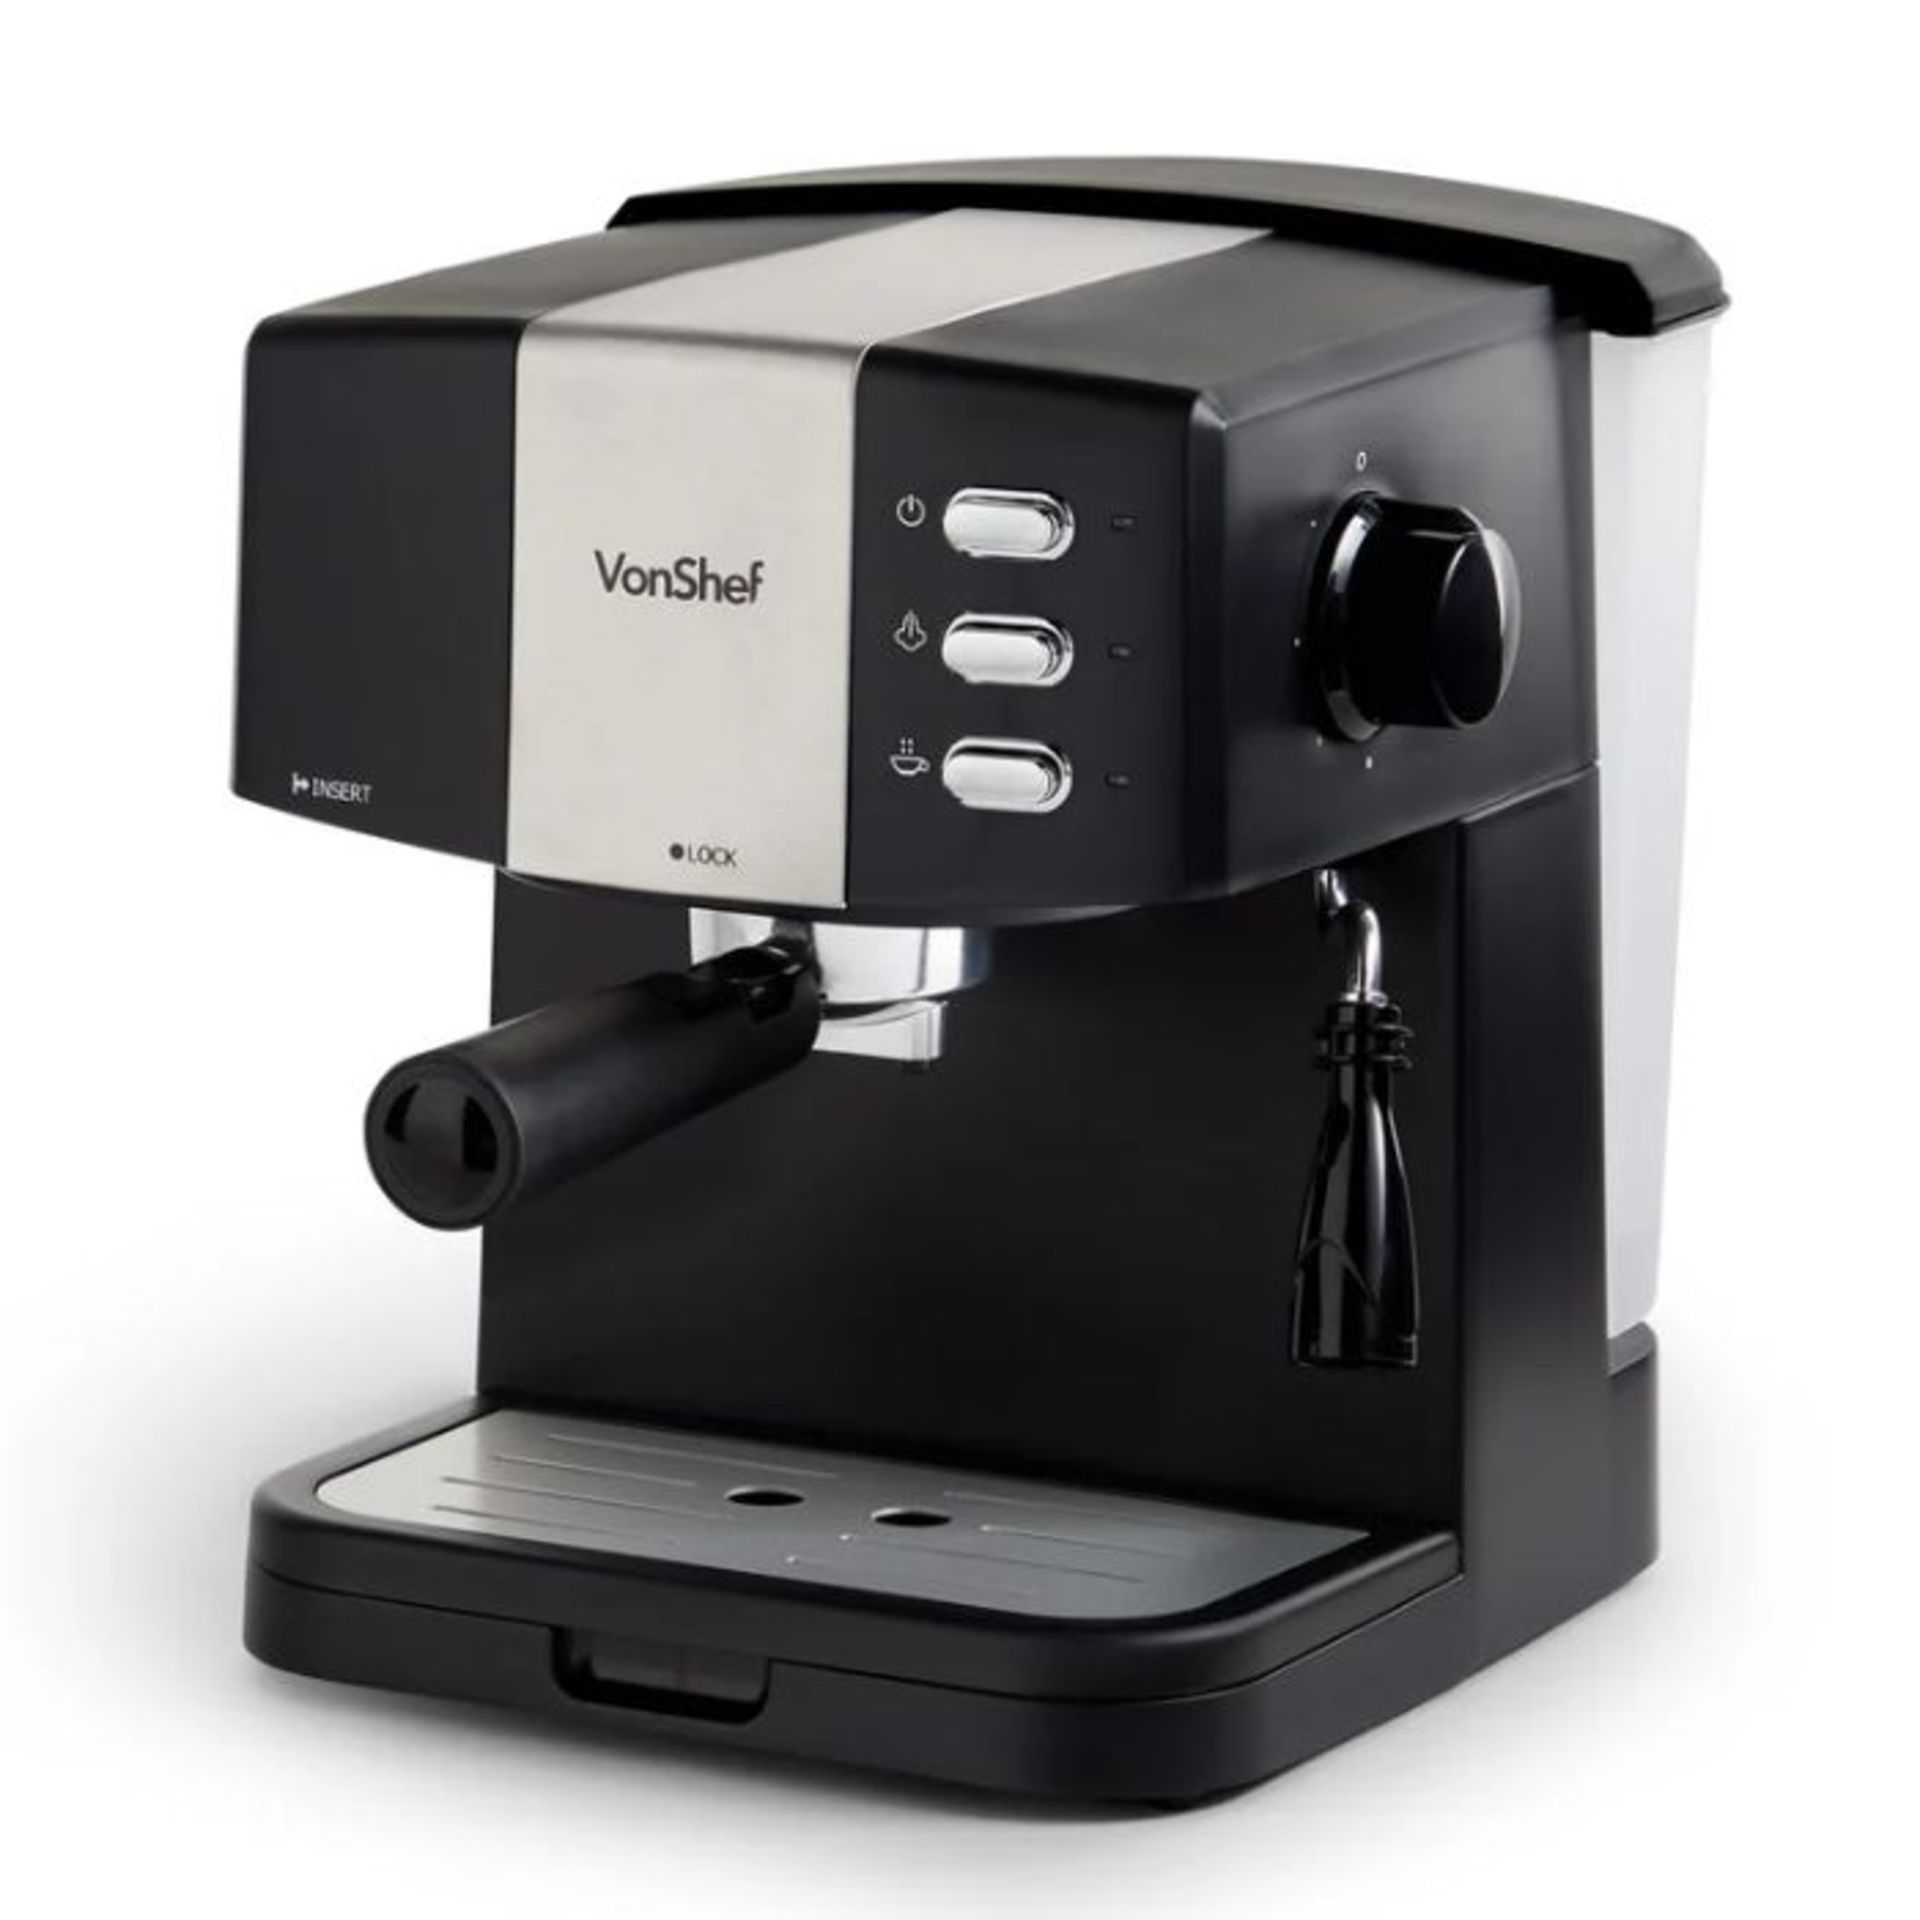 VonShef, 15 Bar Espresso & Coffee Machine (BOXED, NOT TESTED) - RRP £79.99 (VOSH1515 - 29570/7)